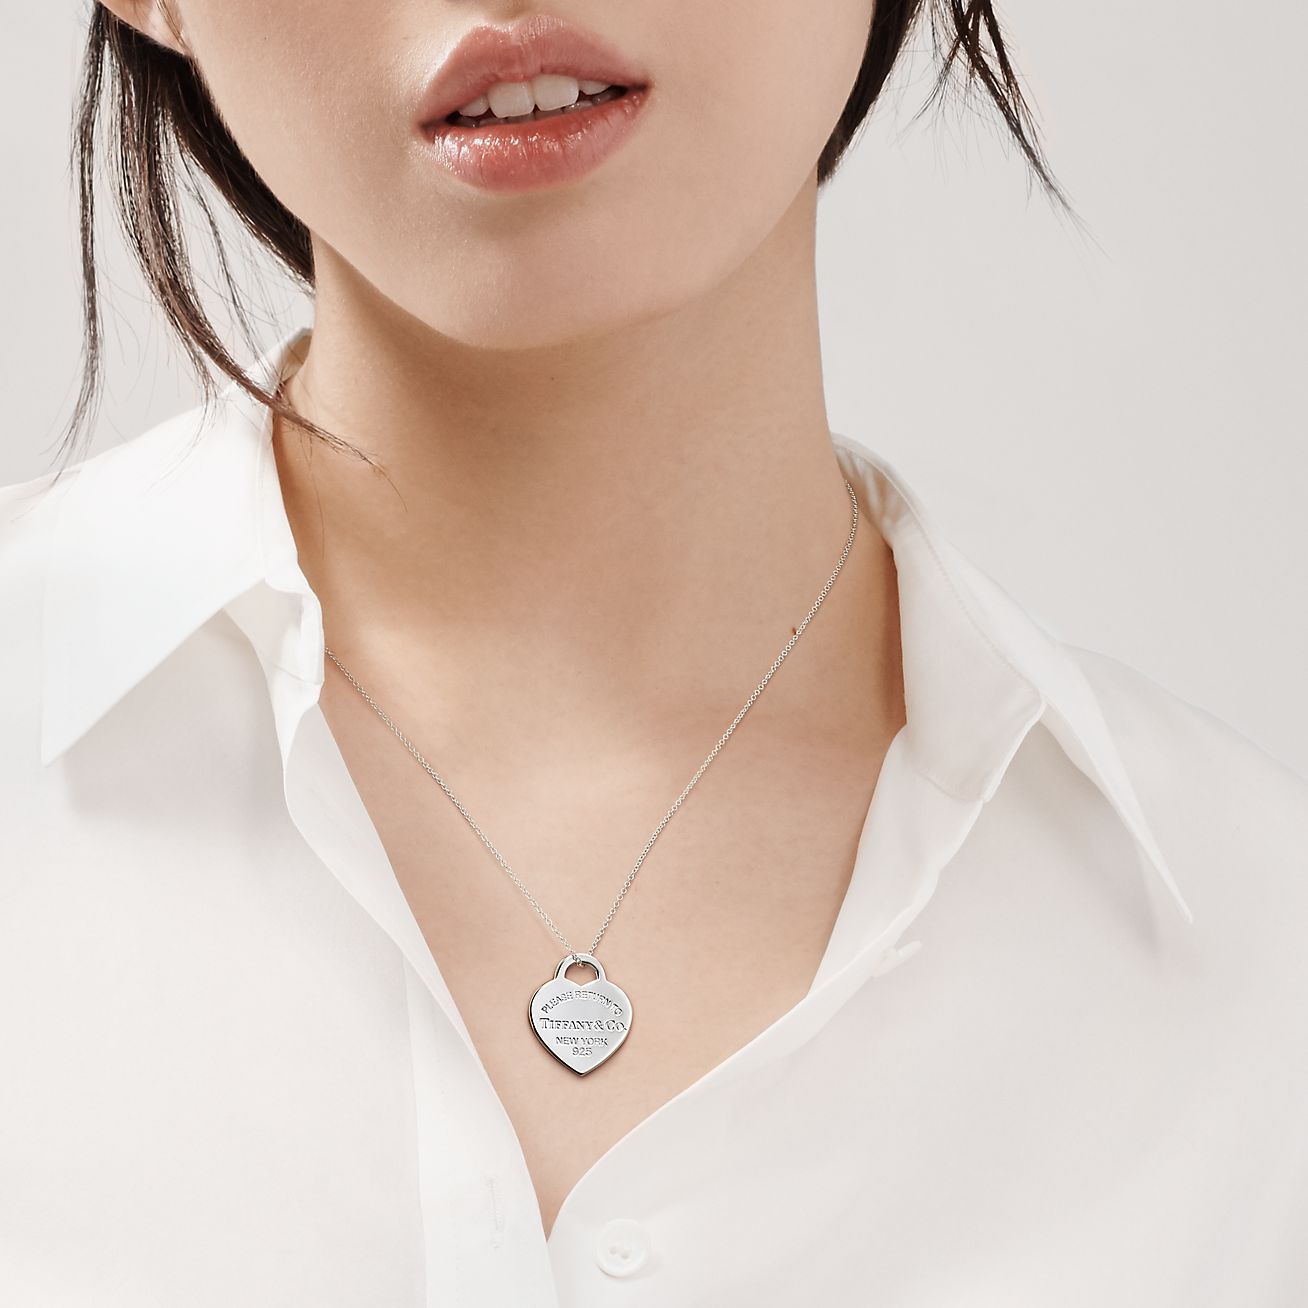 Return to Tiffany® Heart Tag Pendant in Silver, Medium | Tiffany & Co.